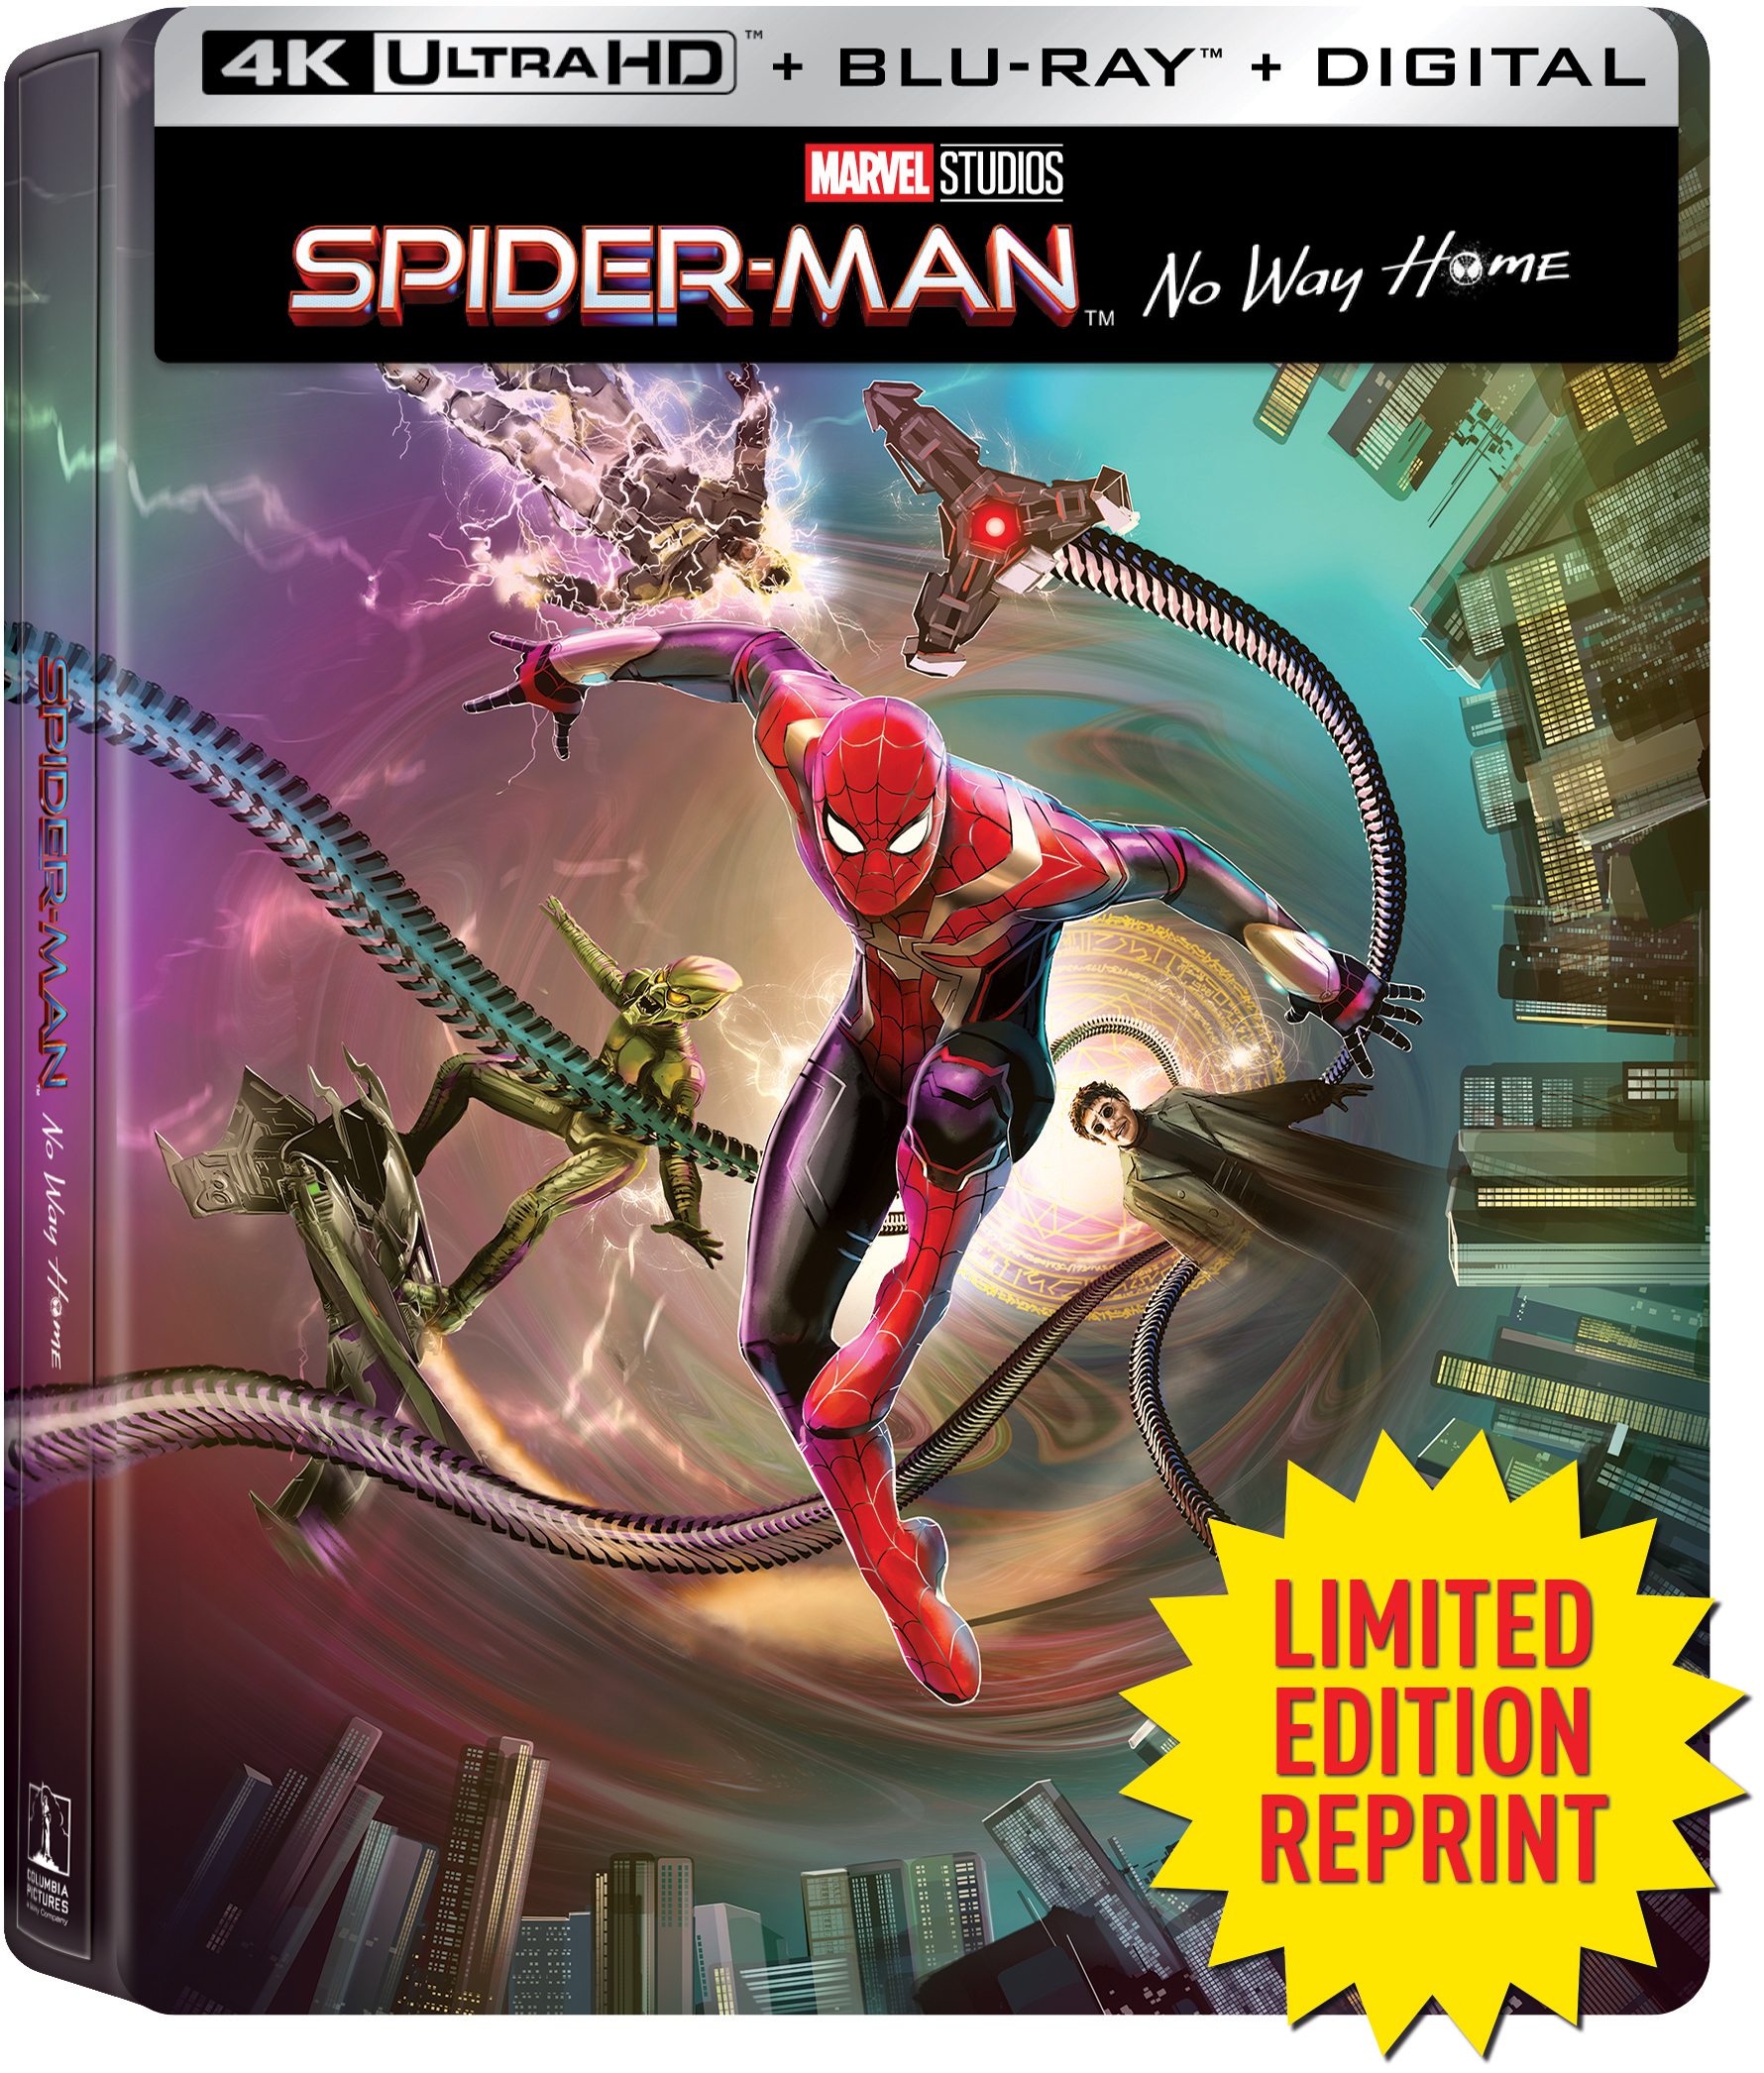 Spider-Man No Way Home Limited Edition SteelBook 4K Ultra HD Blu-ray/Blu-ray 2021